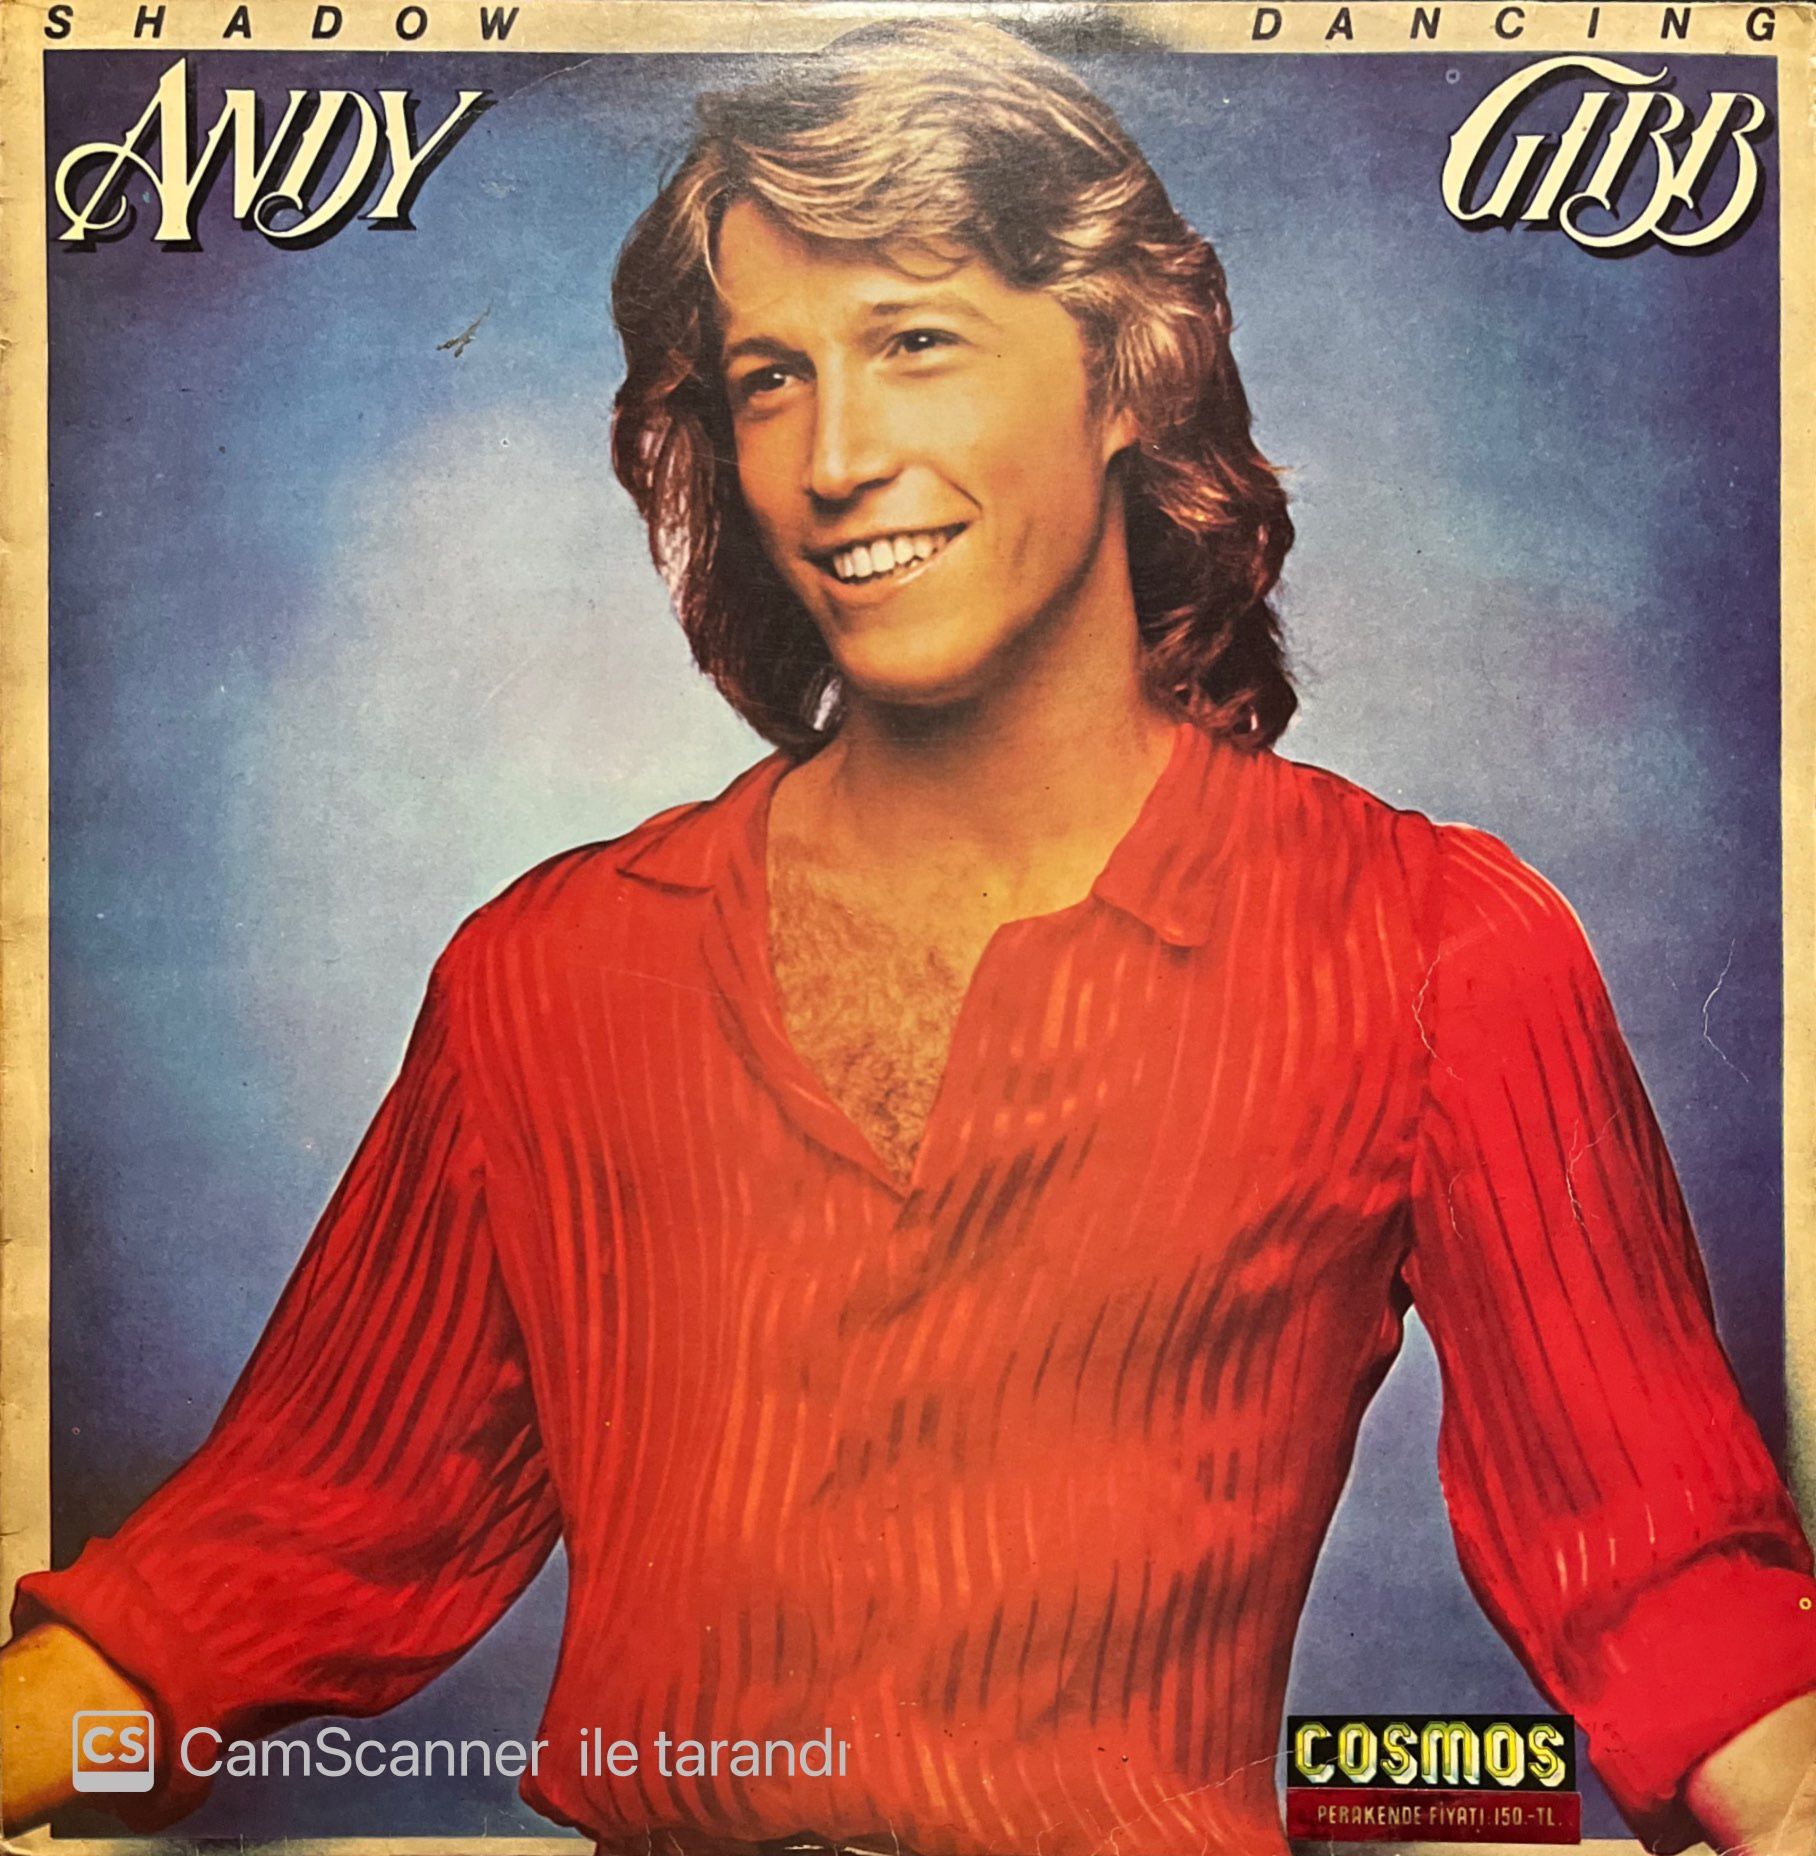 Andy Gibb Shadow Dancing LP Plak